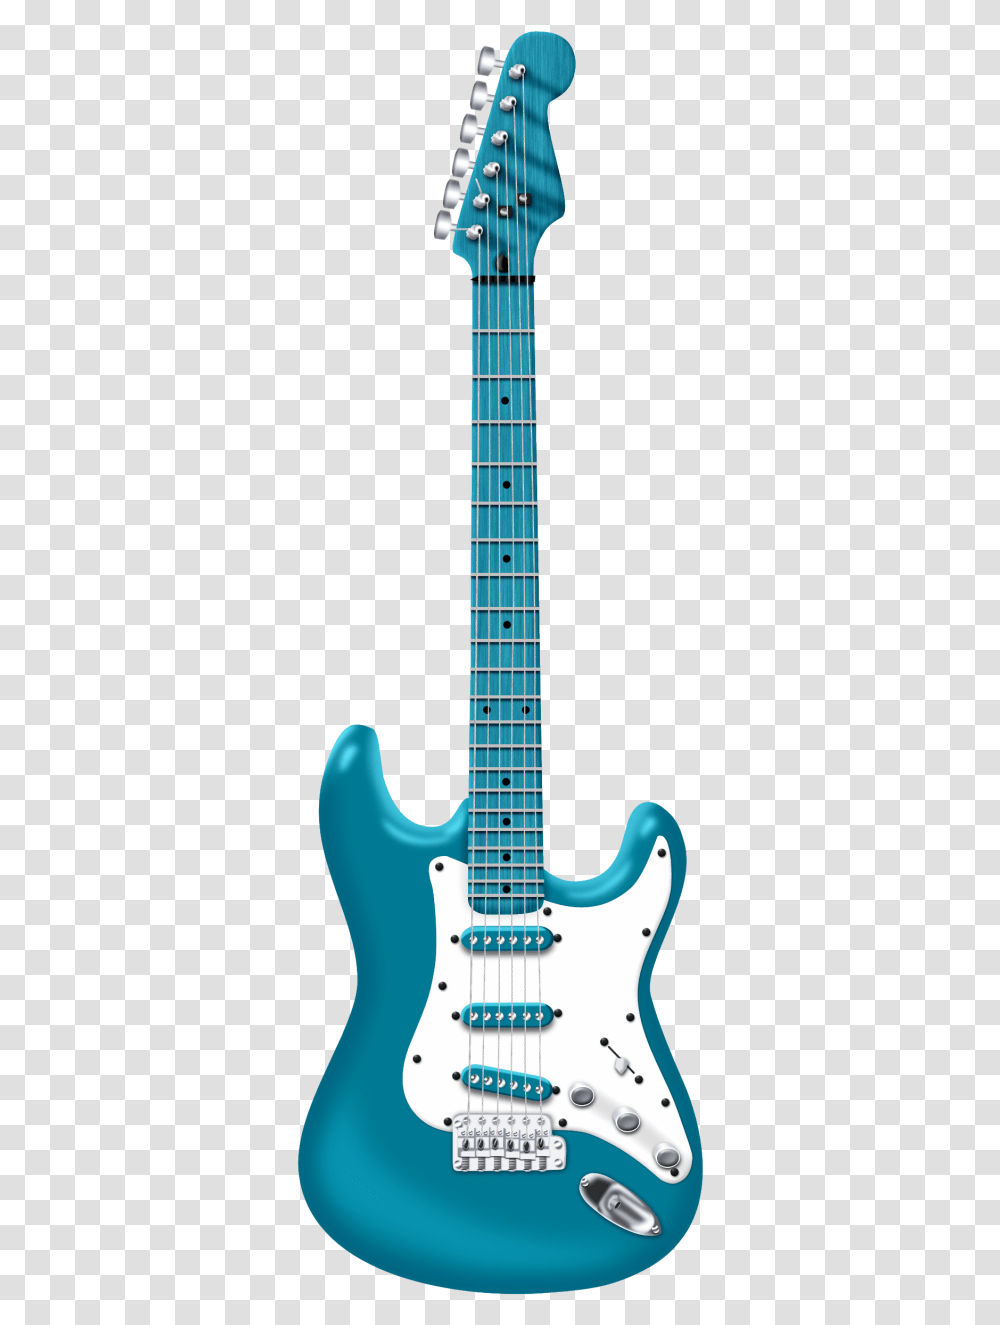 Electric Instruments Fender Strat Guitar Stratocaster, Leisure Activities, Musical Instrument, Electric Guitar, Bass Guitar Transparent Png